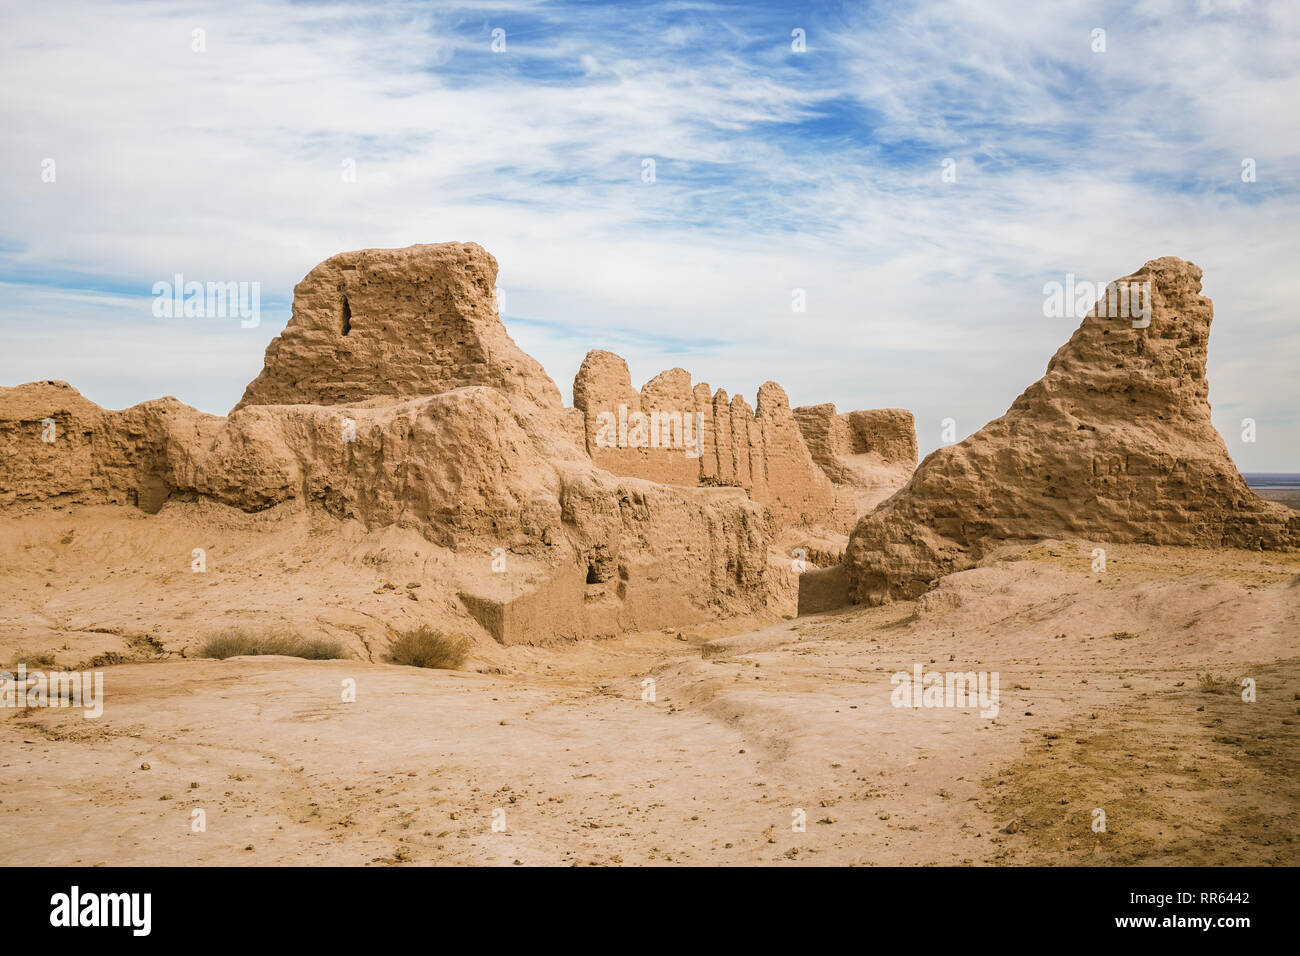 Ruins of the Ayaz-Kala fortress of ancient Khorezm in Kyzylkum desert, Uzbekistan Stock Photo